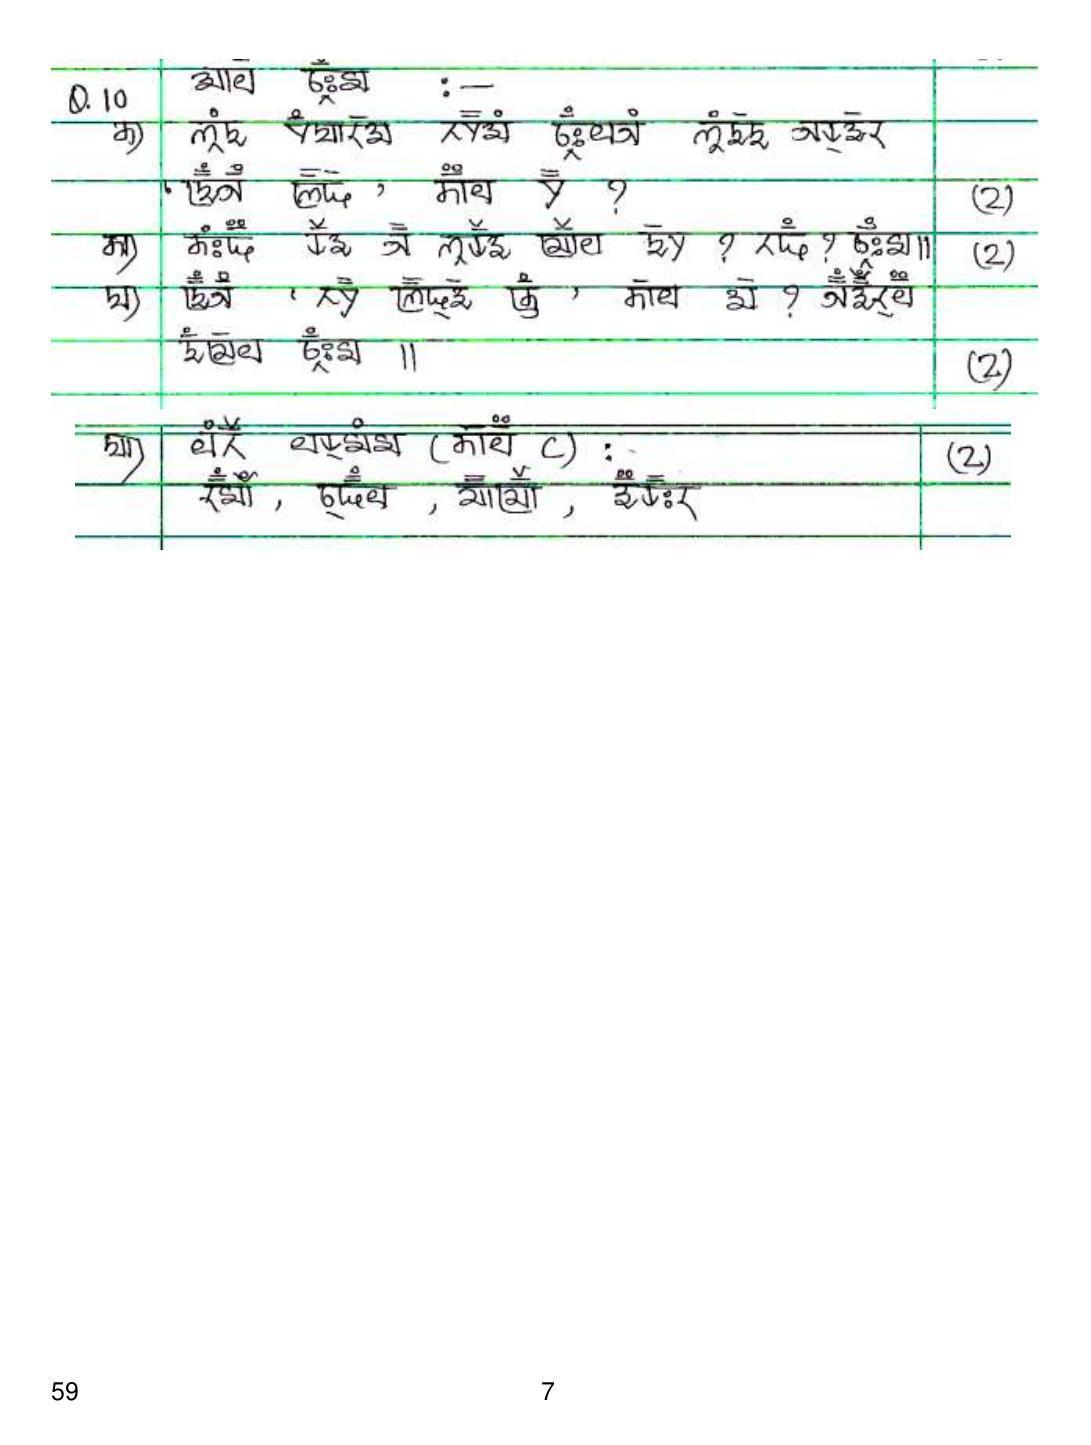 CBSE Class 10 59 Gurung 2019 Question Paper - Page 7